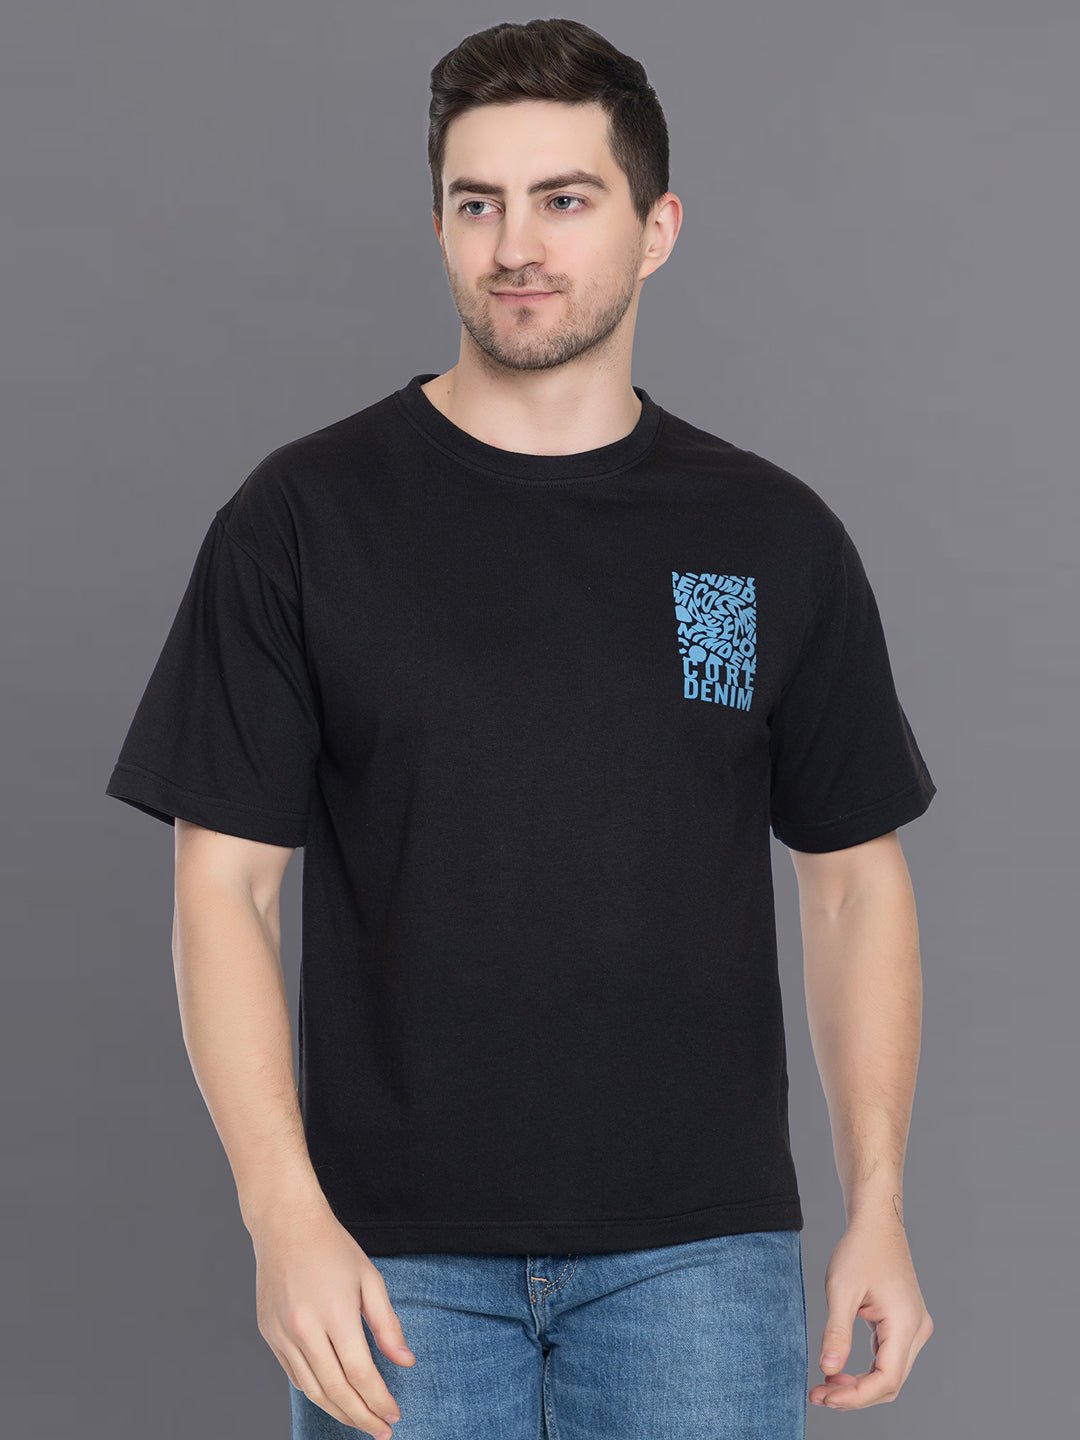 Black Round T-Shirt - clubyork